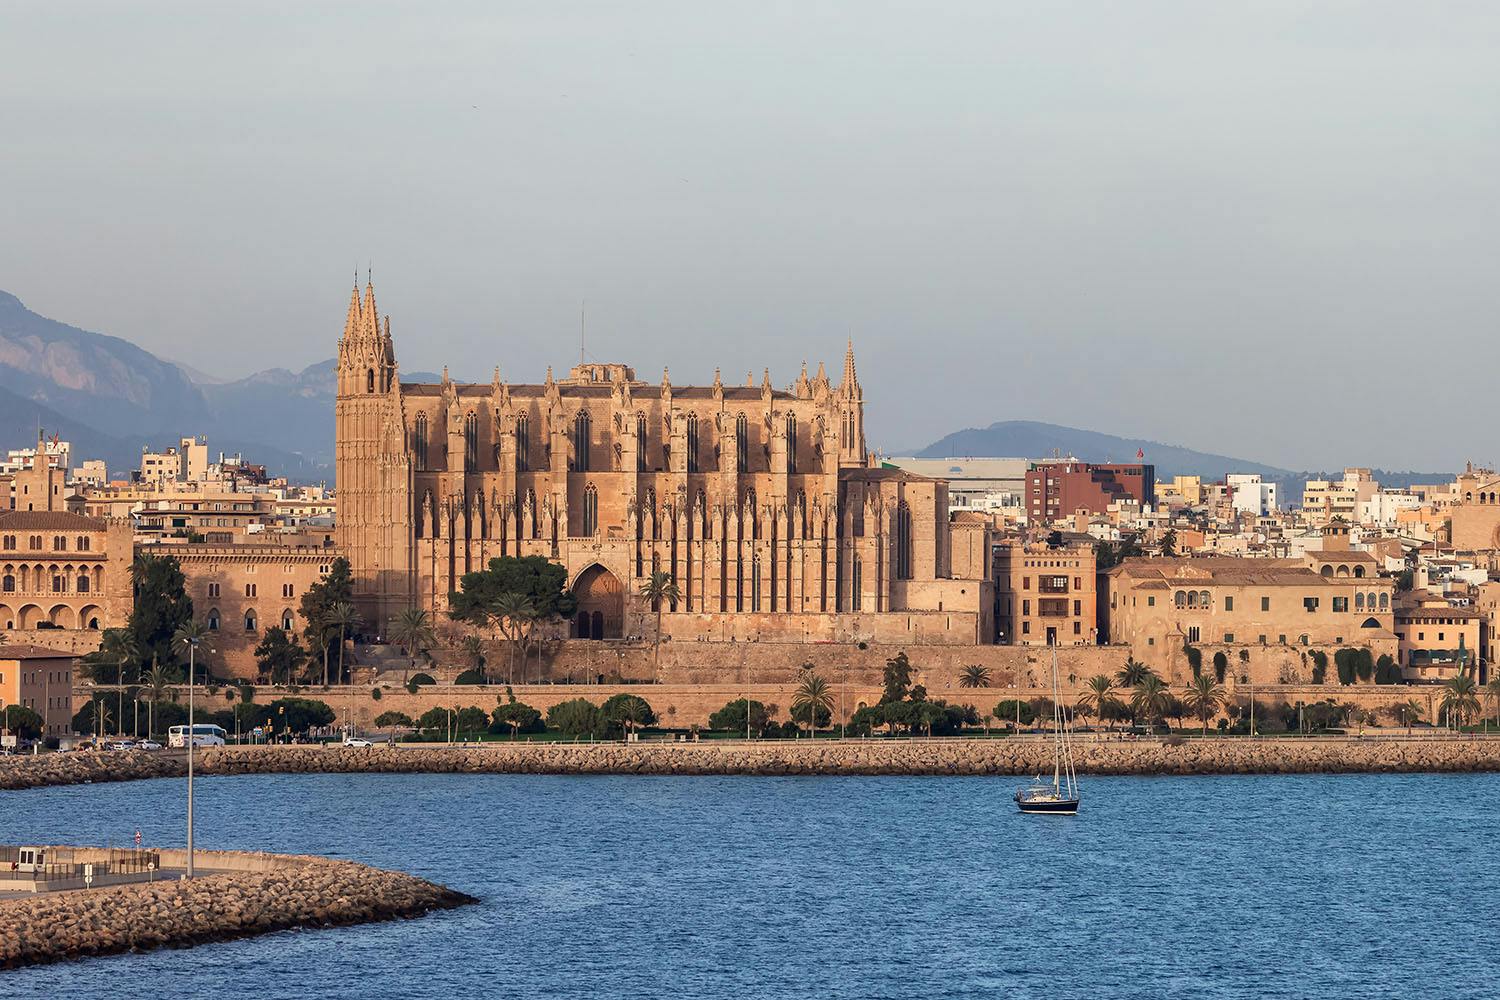 The Cathedral in Palma de Mallorca